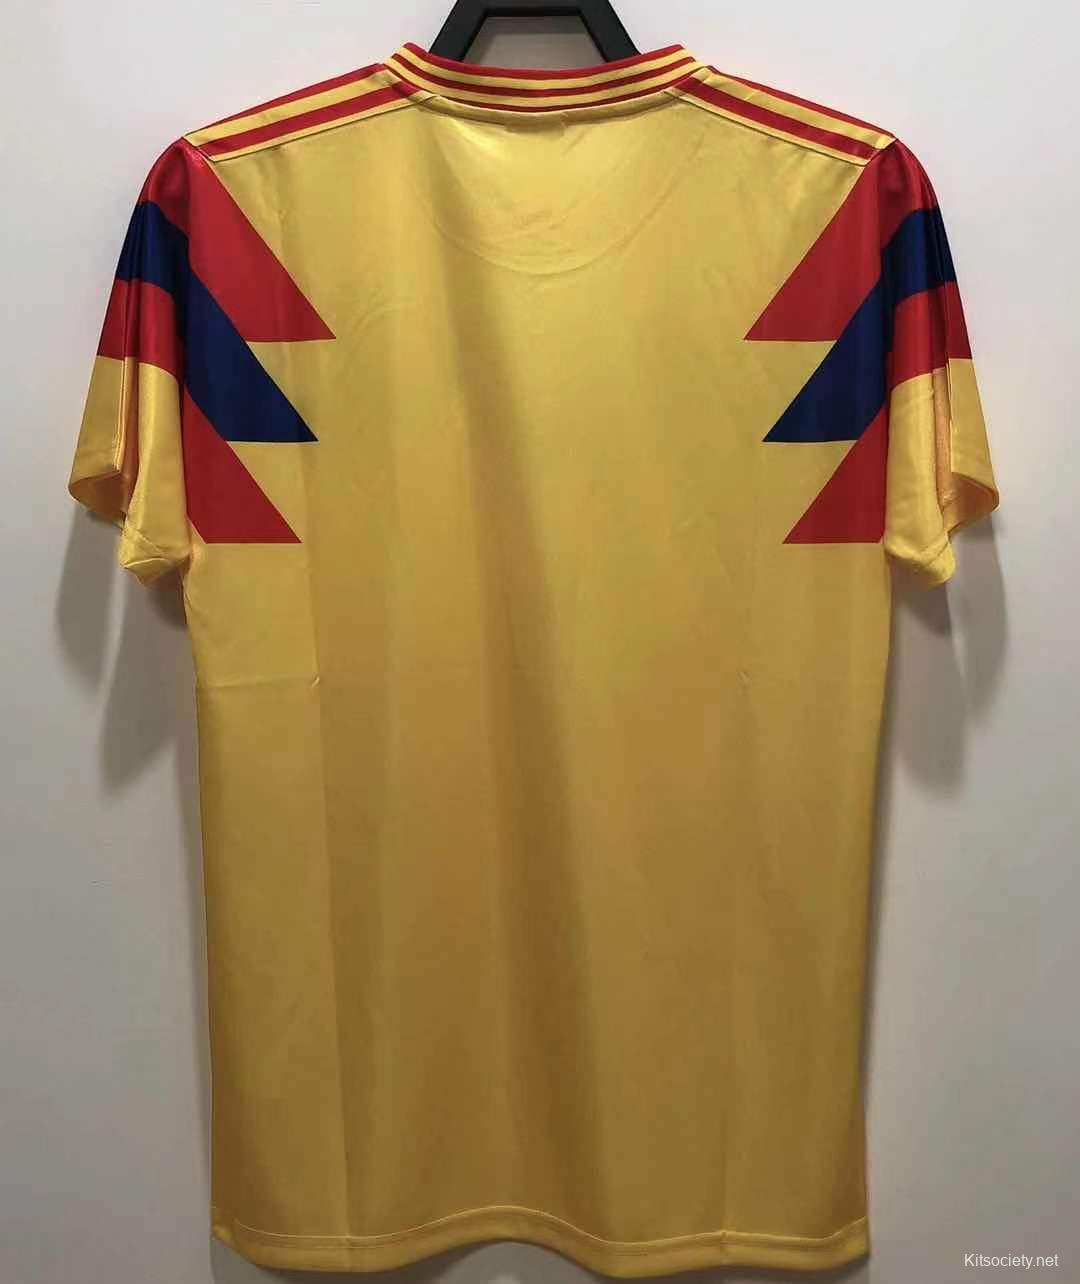 Colombia Away Jersey 1990 Valderrama